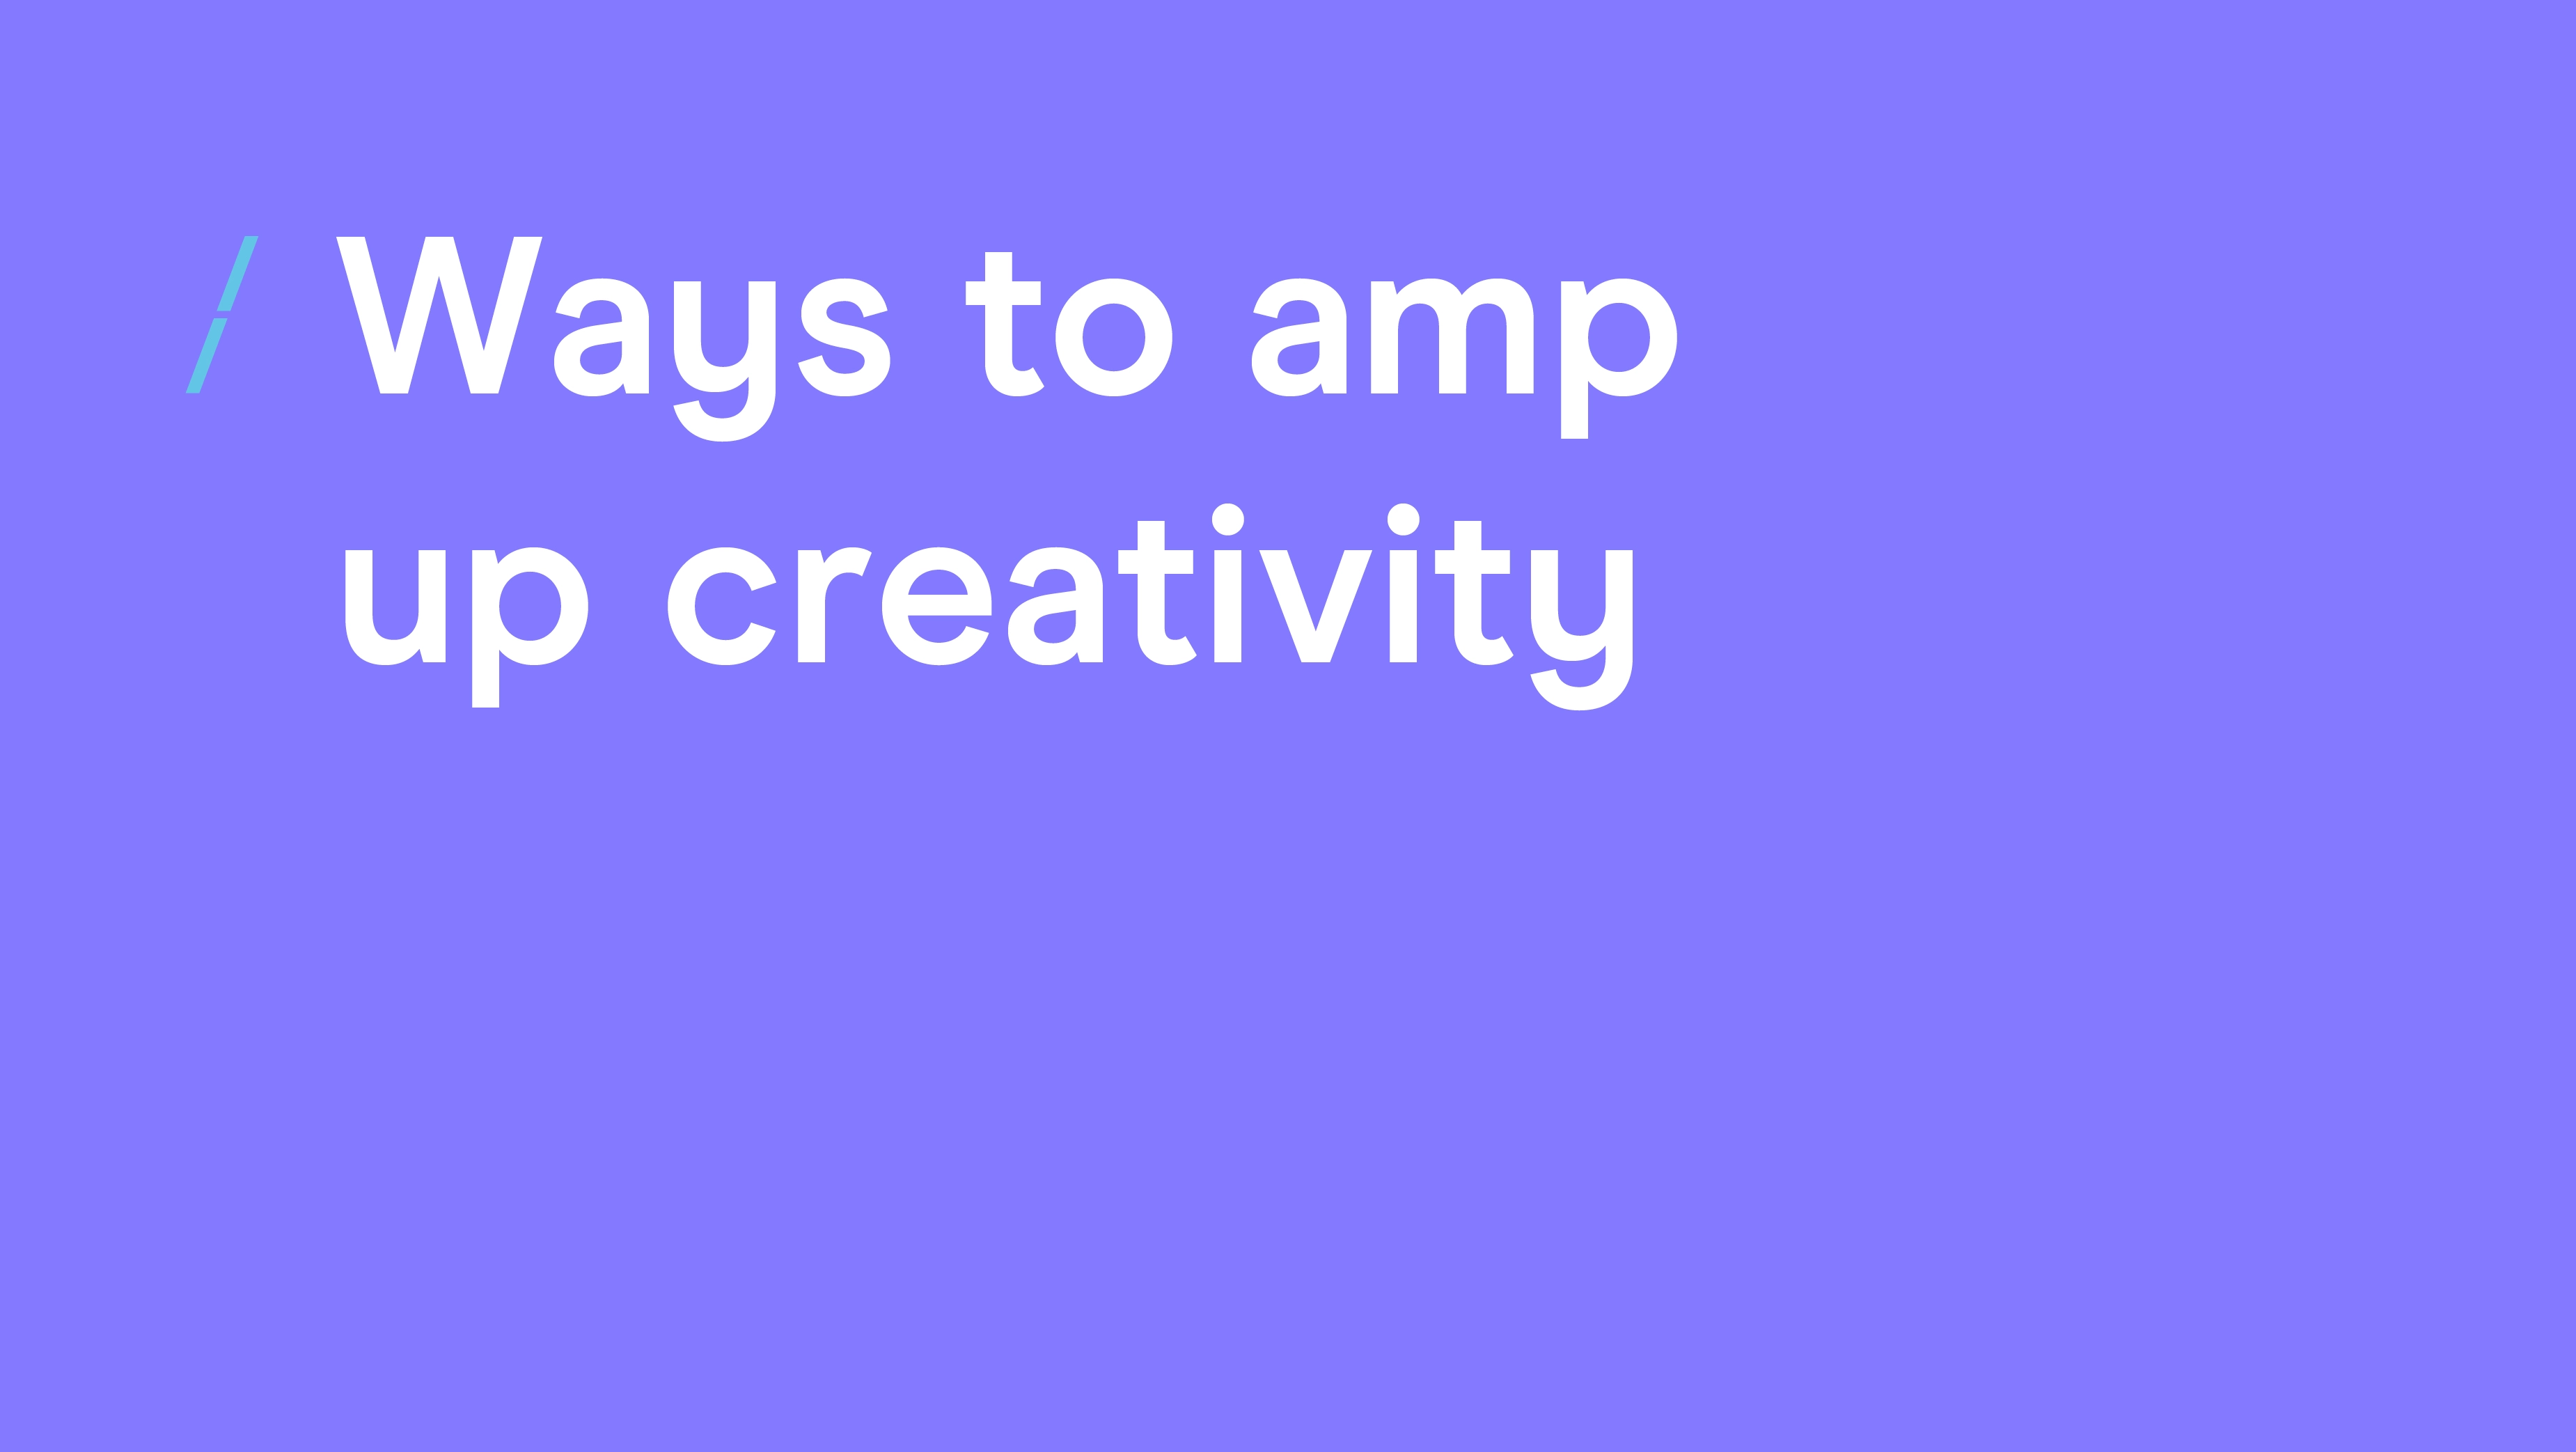 Ways to amp up creativity.jpg